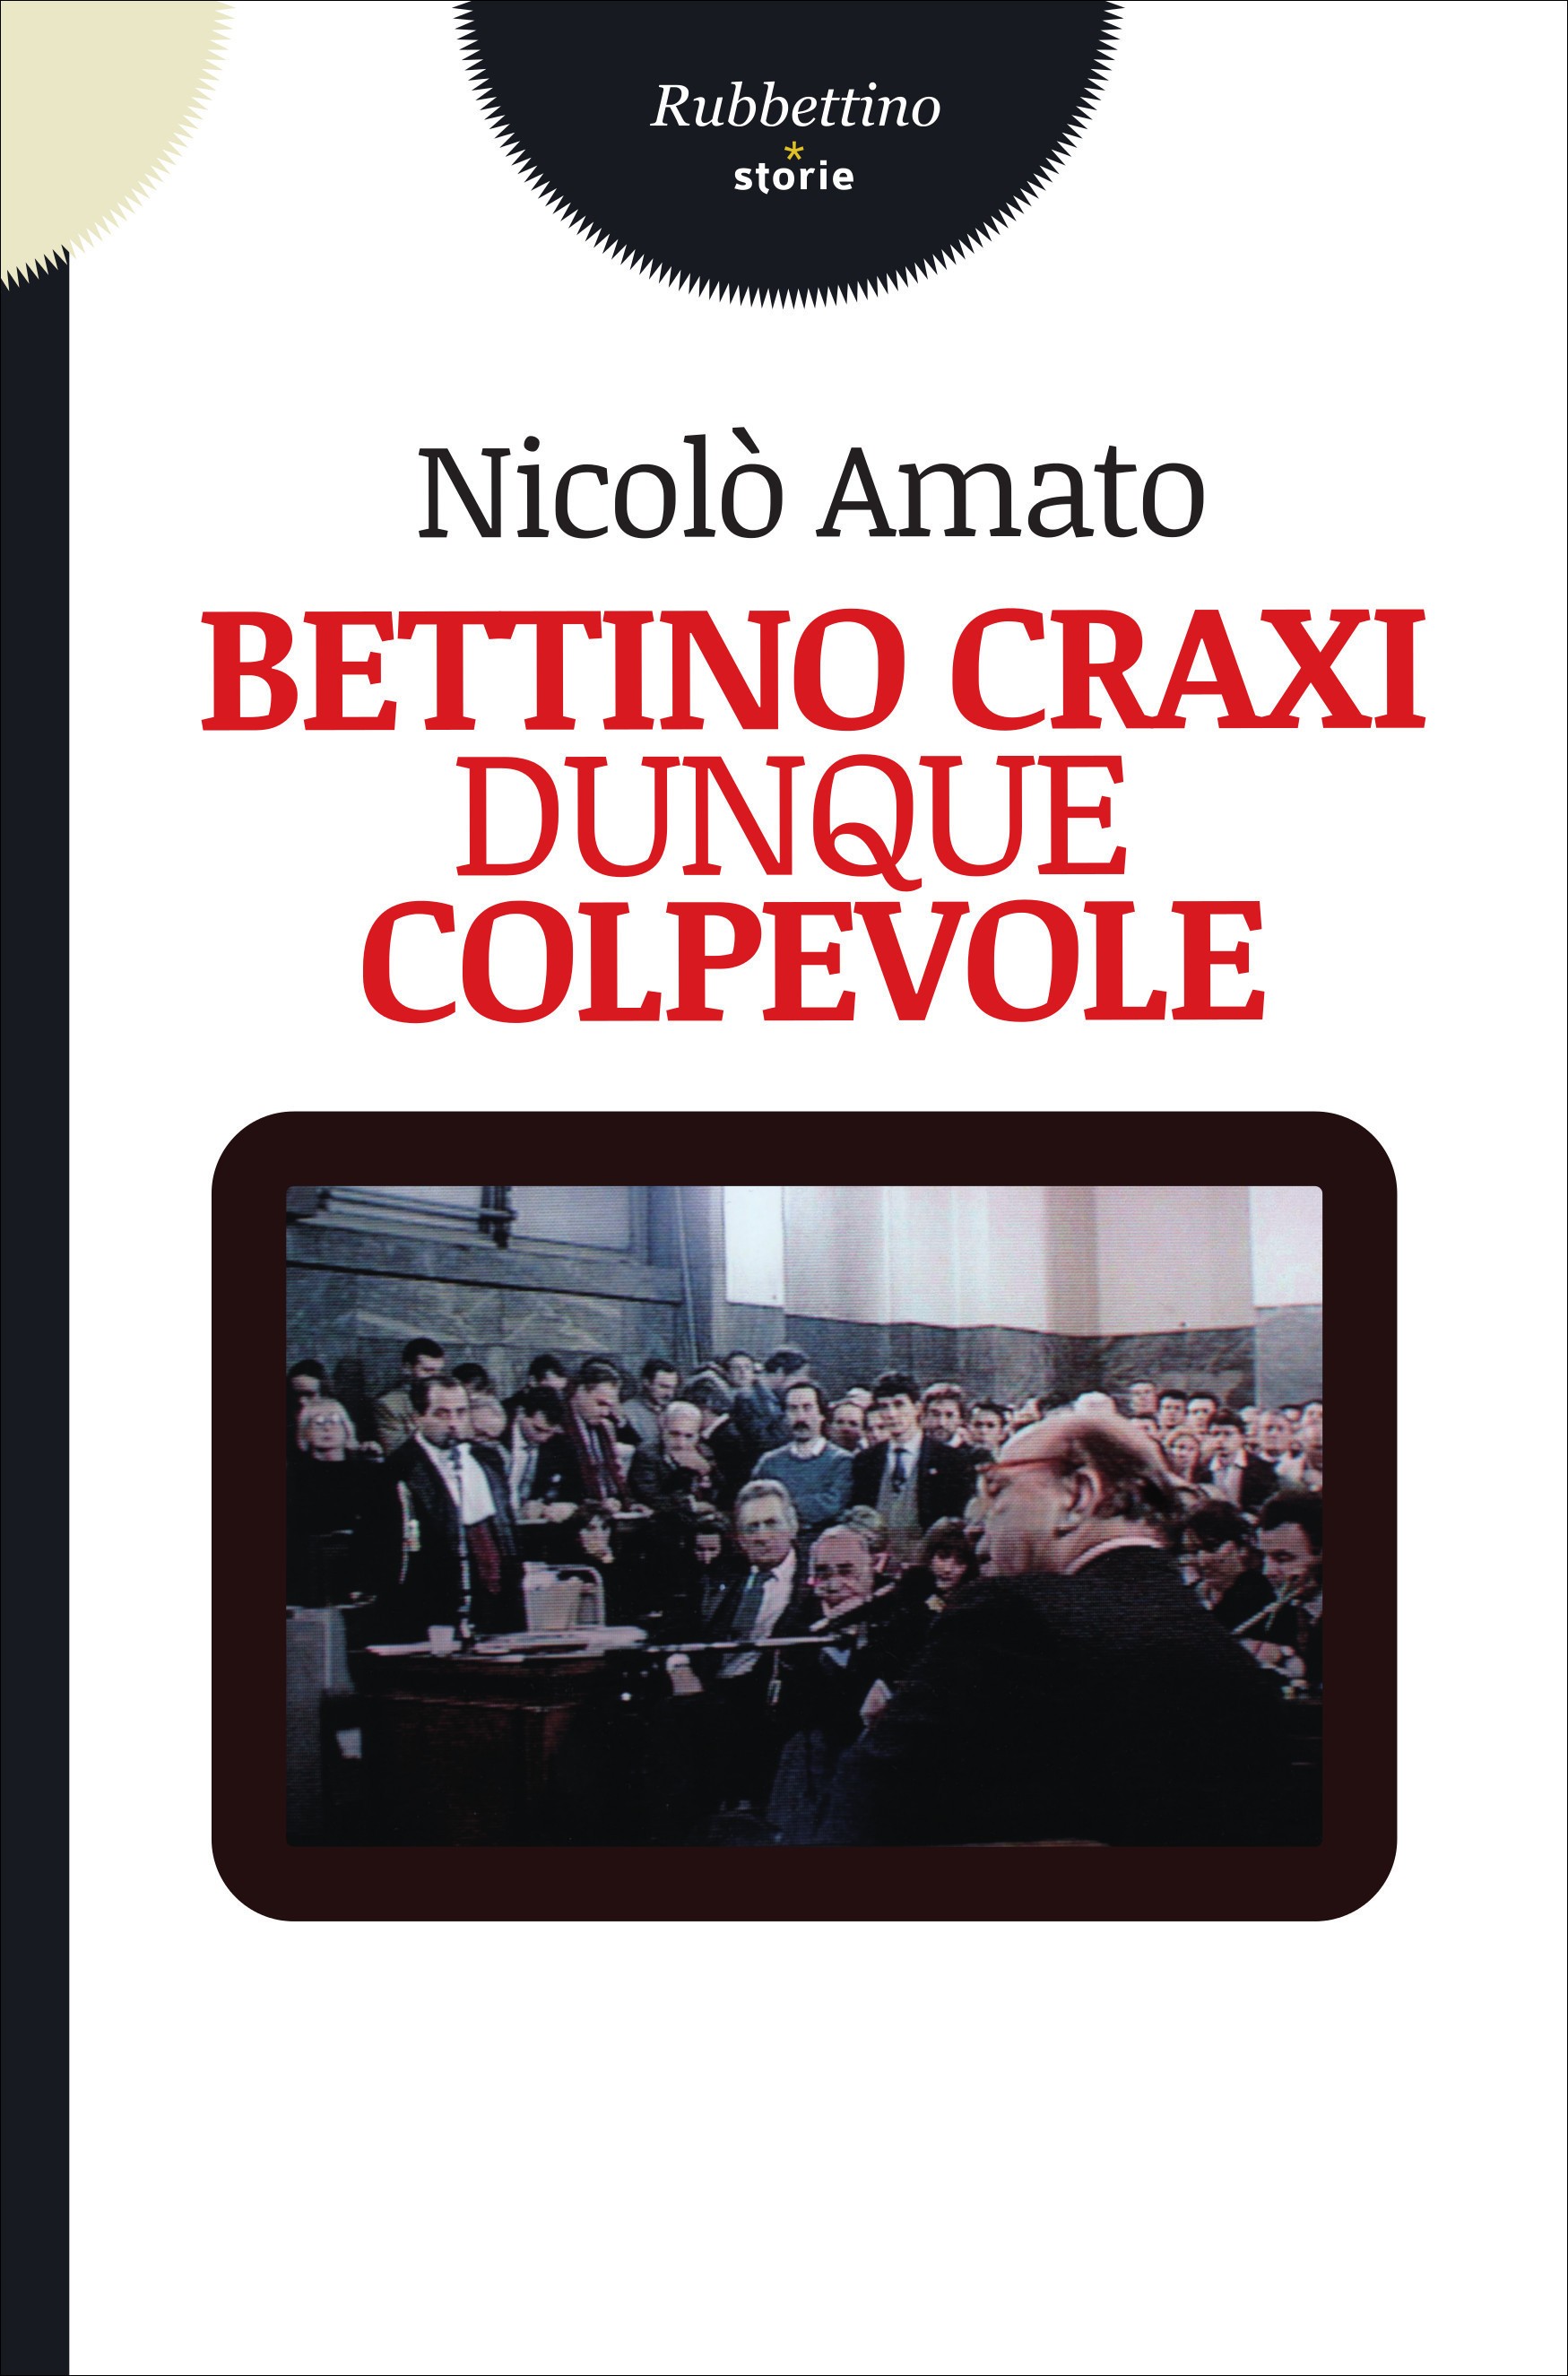 Bettino Craxi dunque colpevole - Librerie.coop